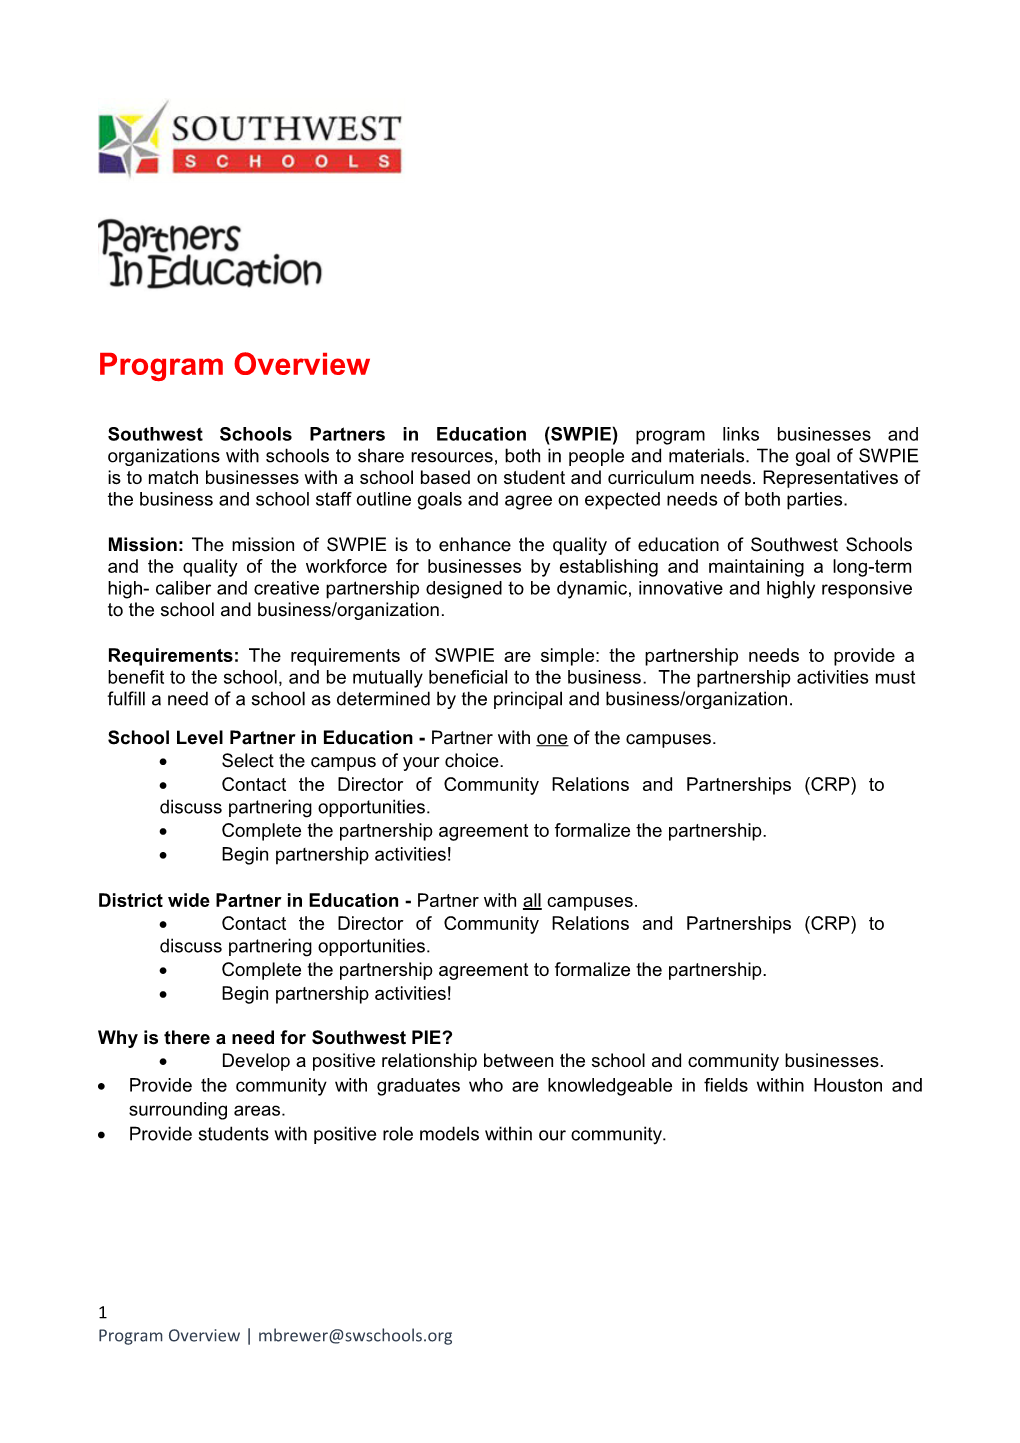 Program Overview s1